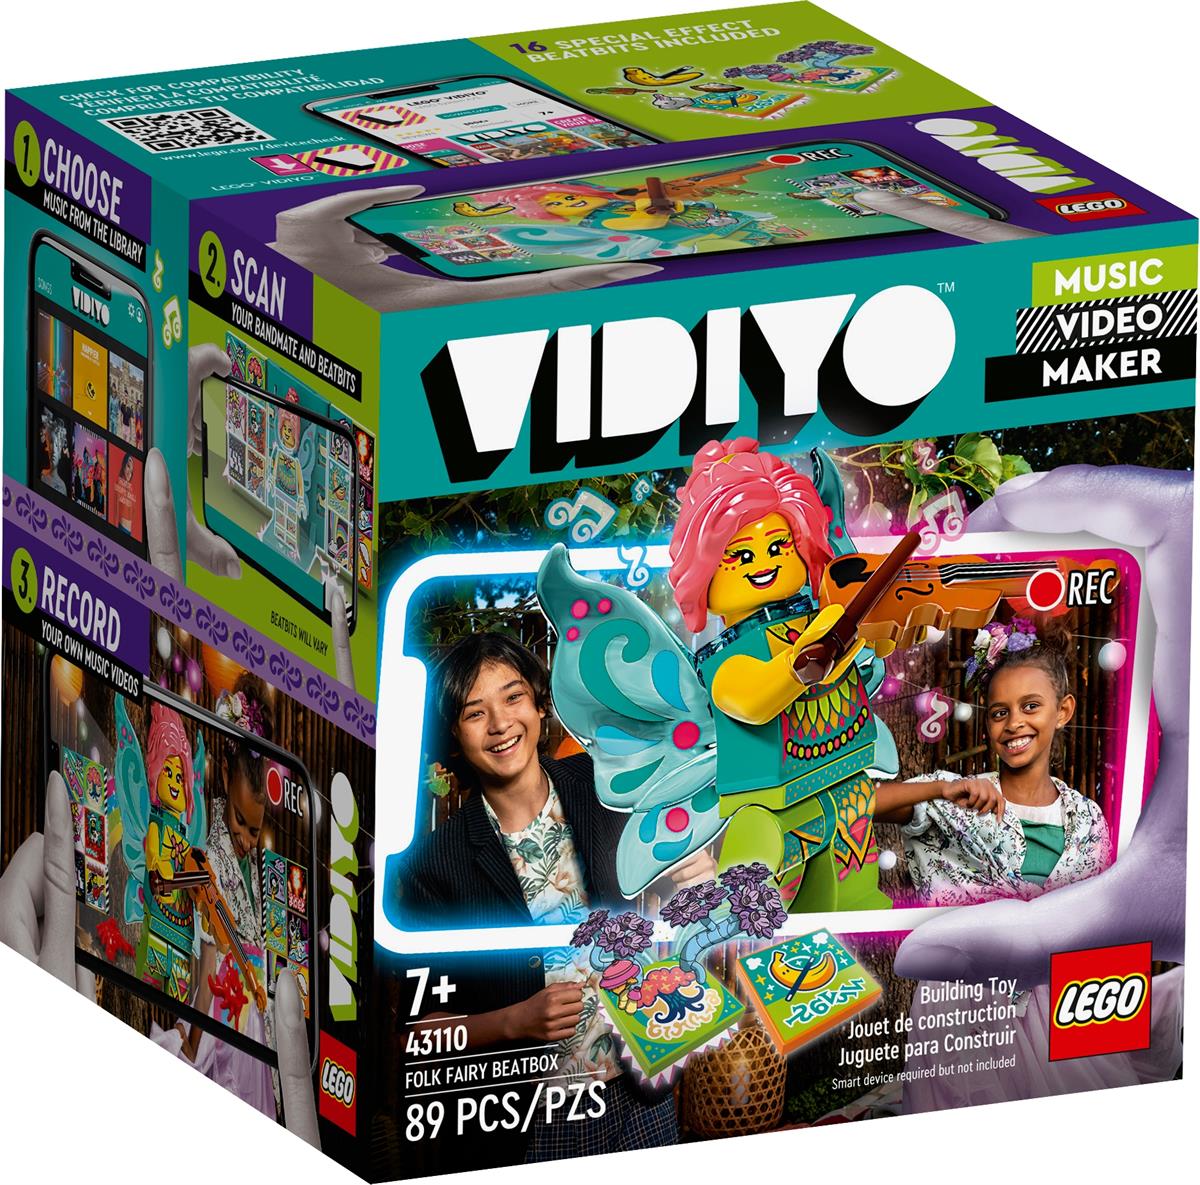 LEGO 43110 FOLK FAIRY BEATBOX VIDIYO